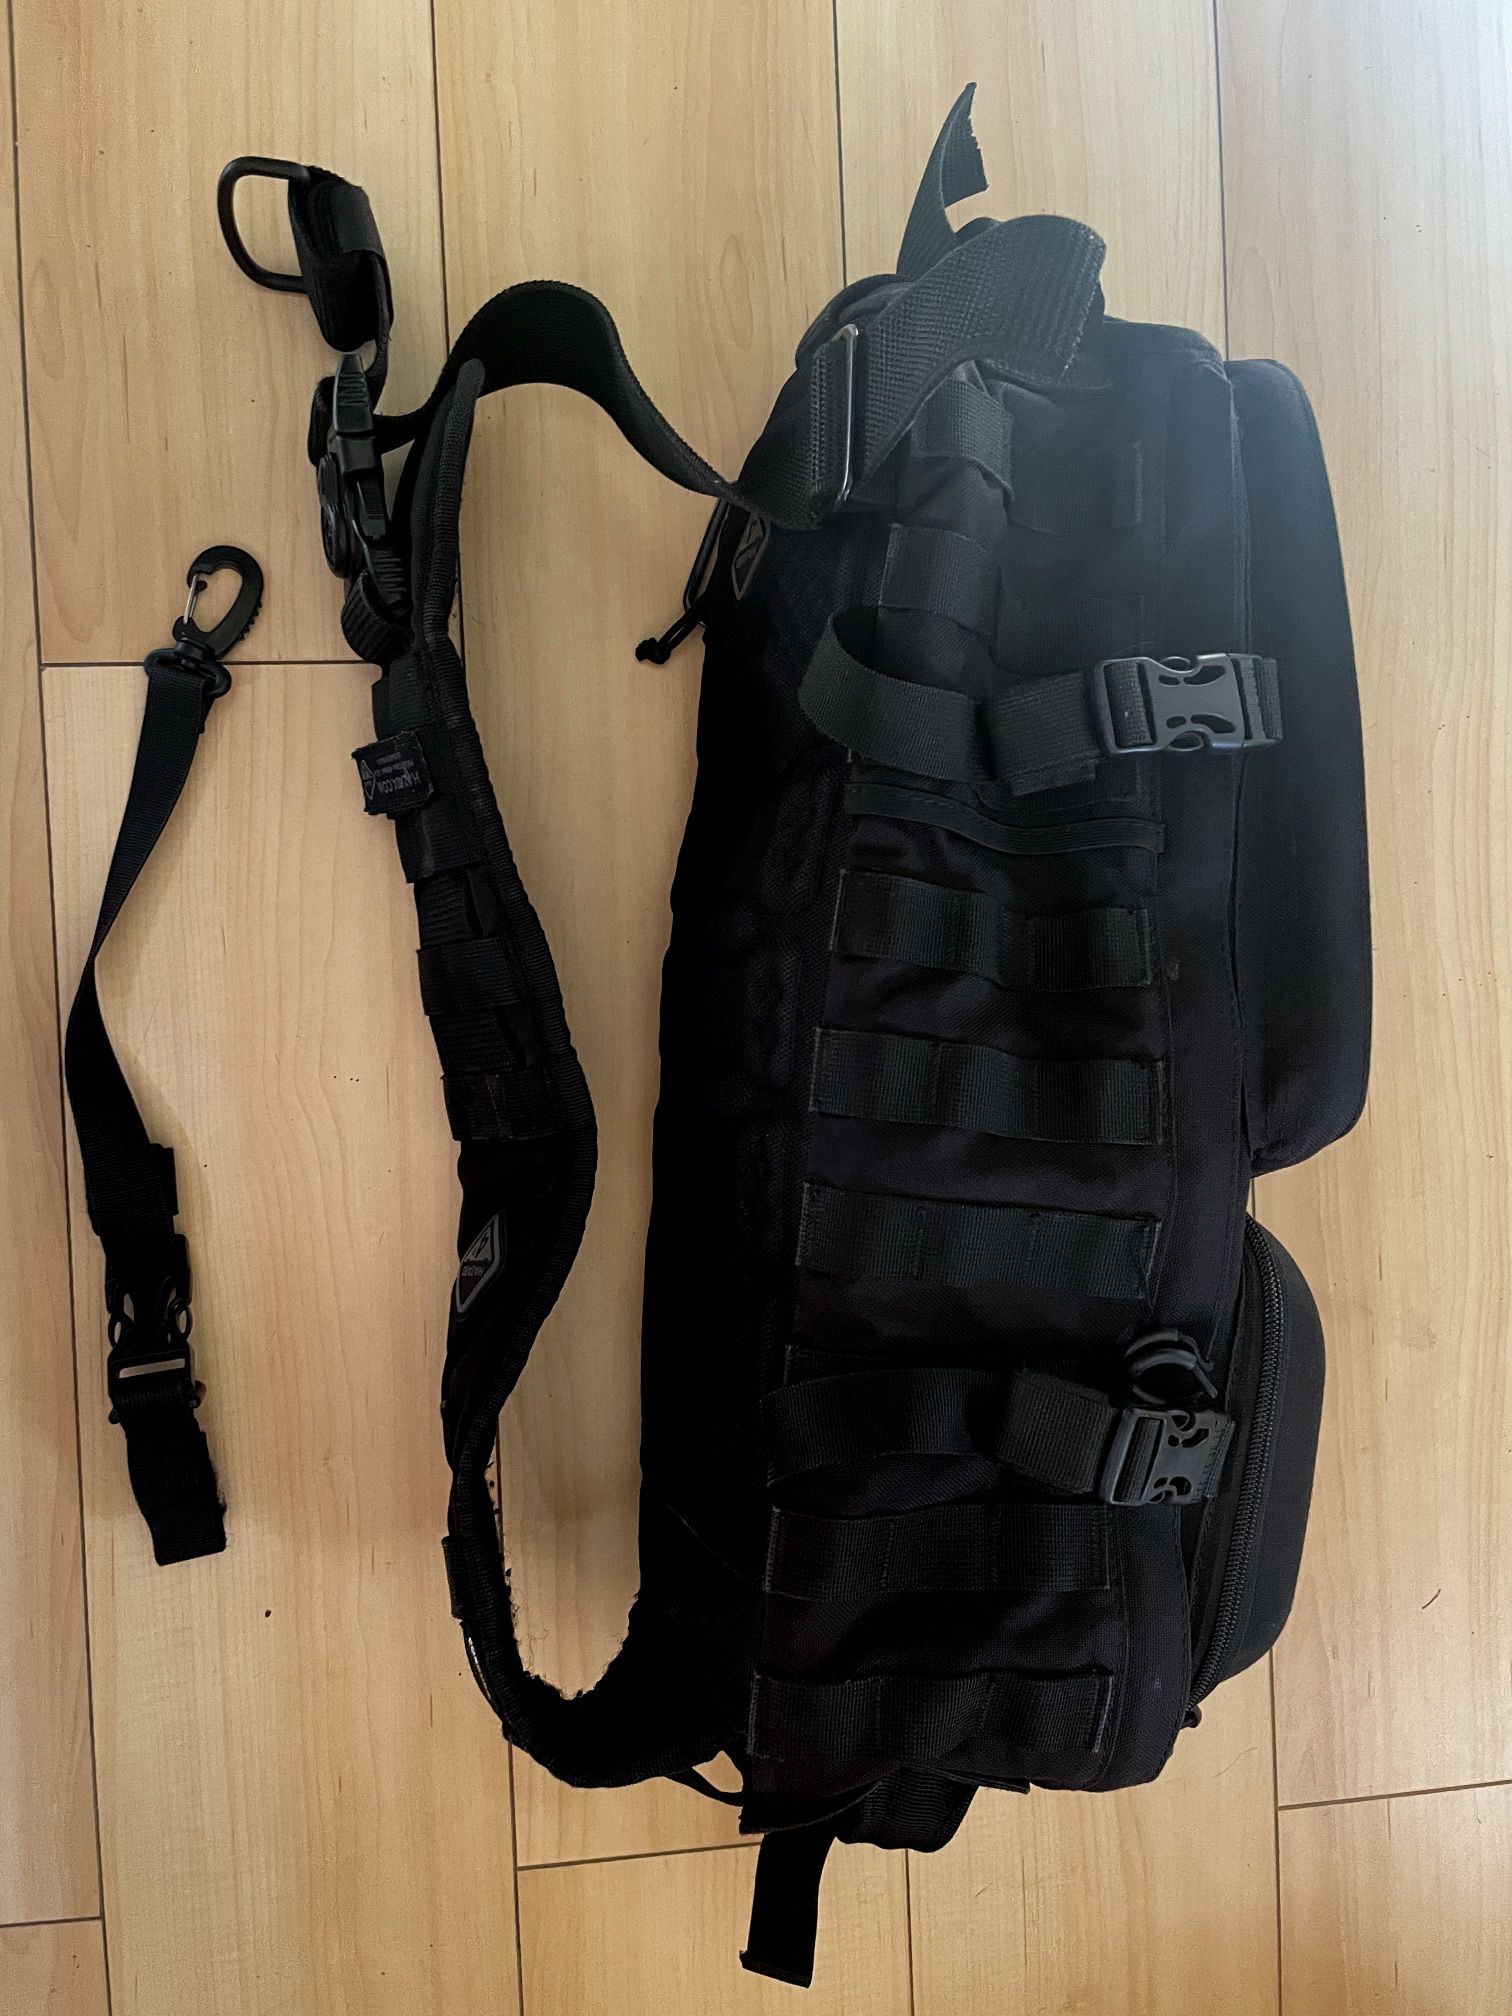 Hazard 4 PlanB 17 Thermocap Tactical Sling Bag + Strap Black